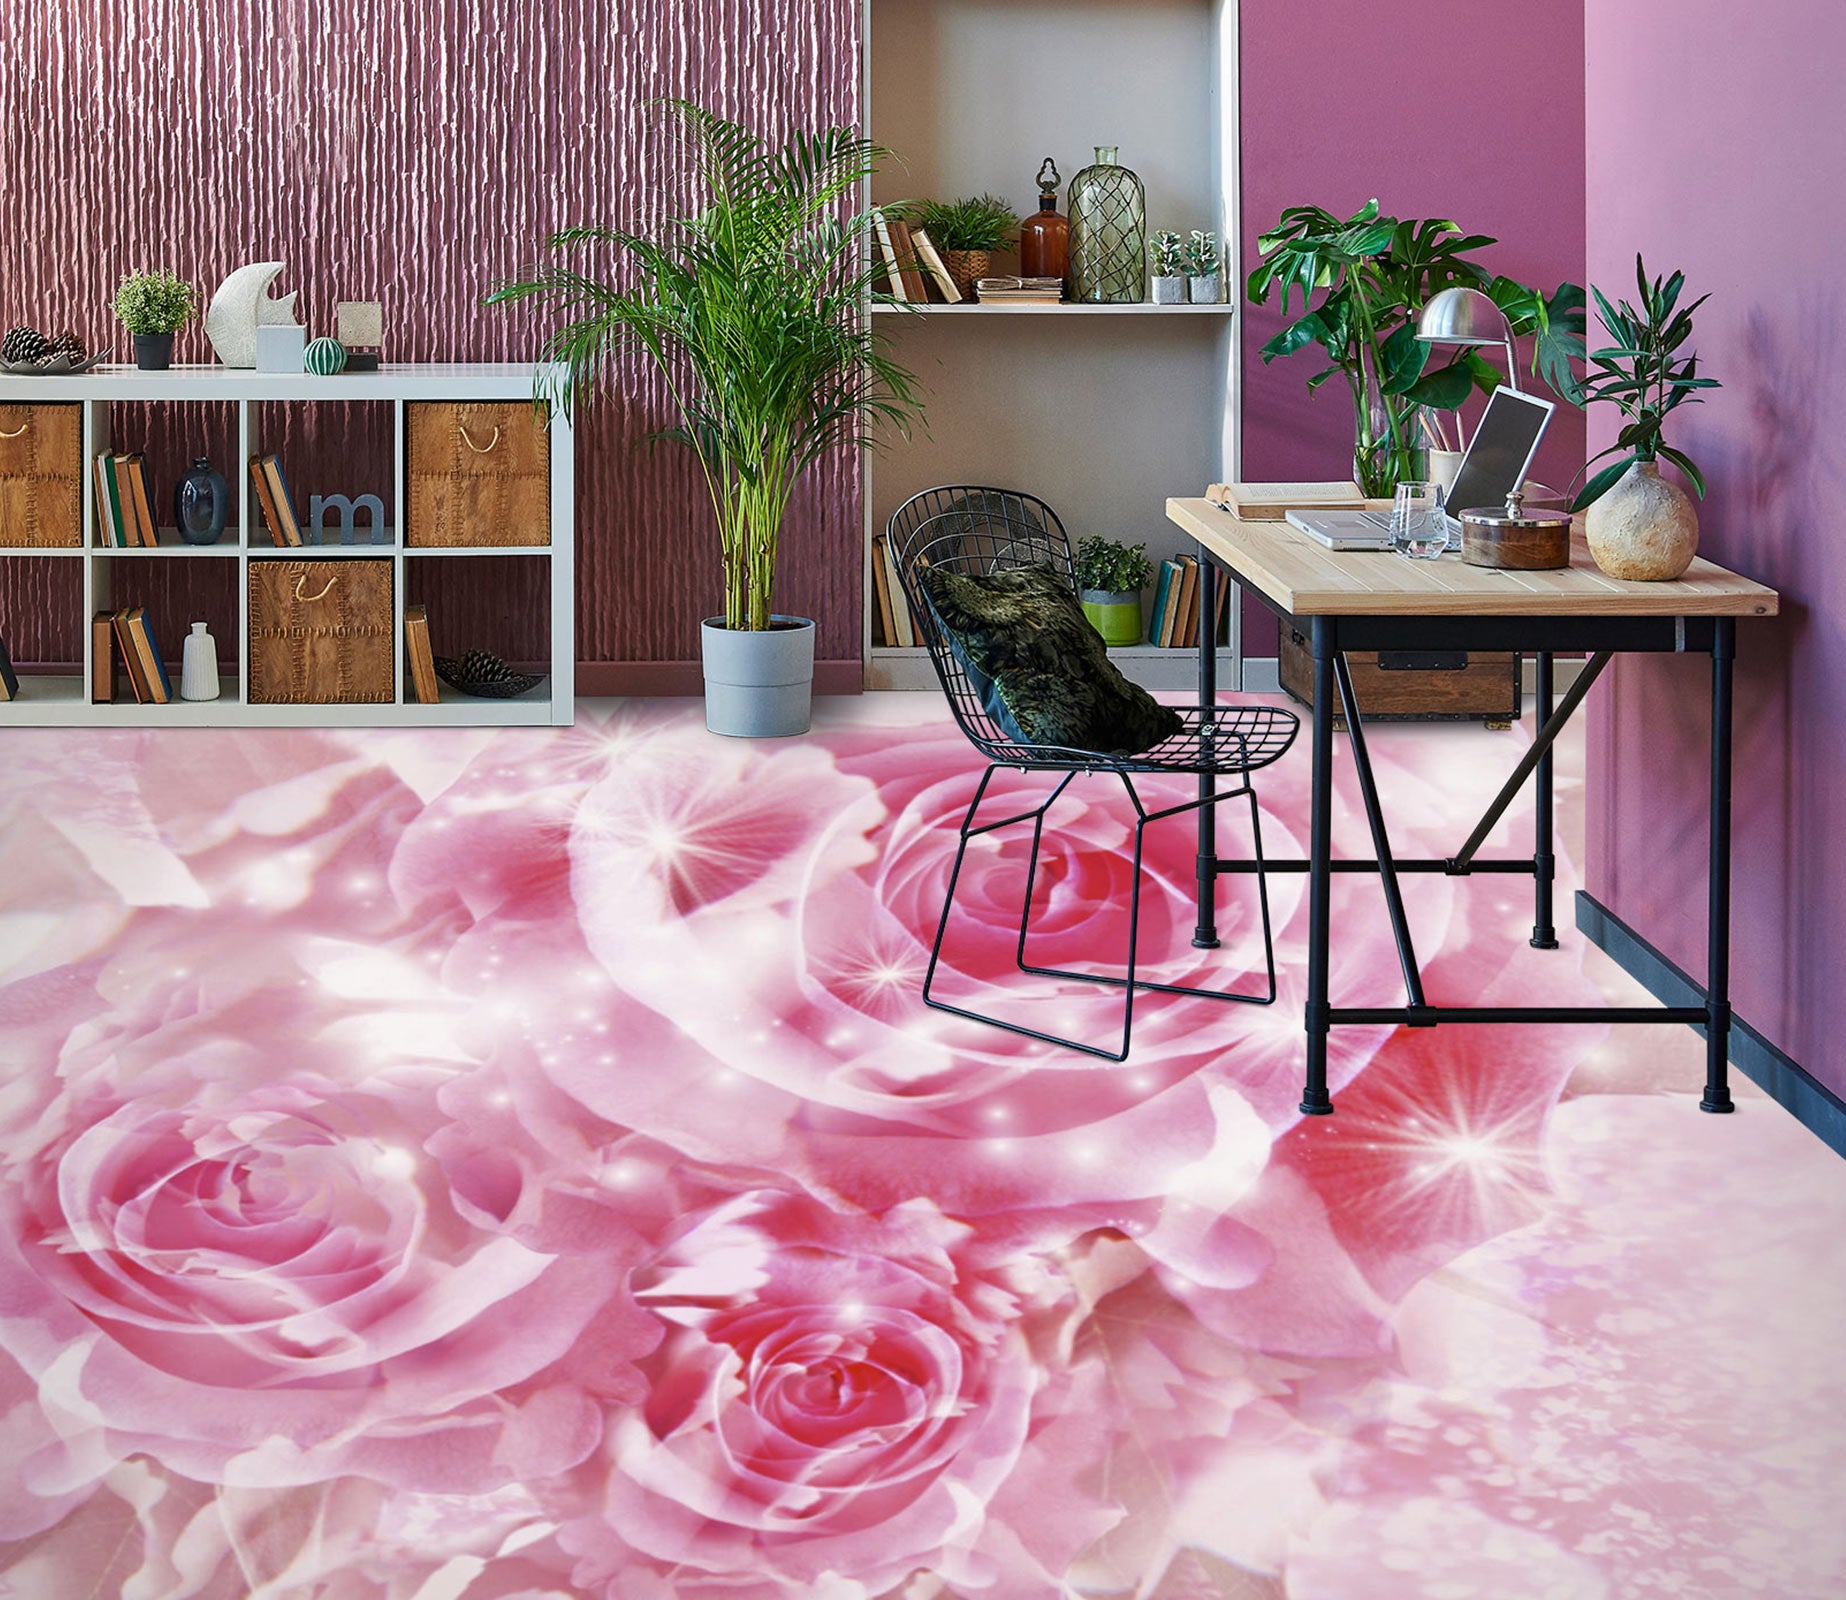 3D Dreamy Pink Roses 1362 Floor Mural  Wallpaper Murals Self-Adhesive Removable Print Epoxy